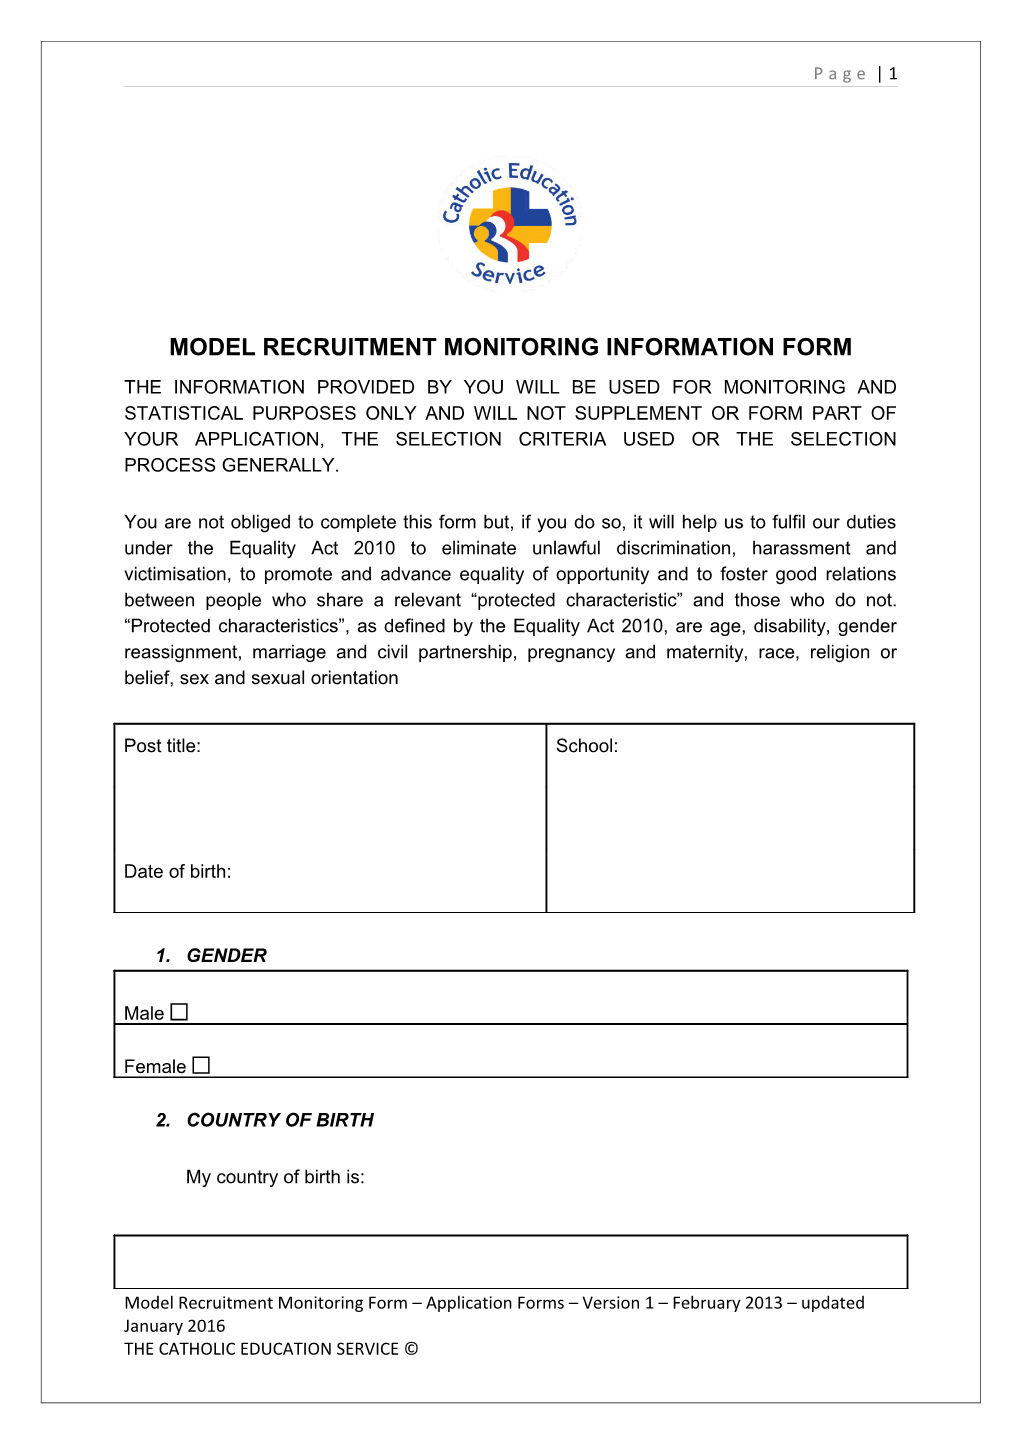 Model Recruitment Monitoring Information Form